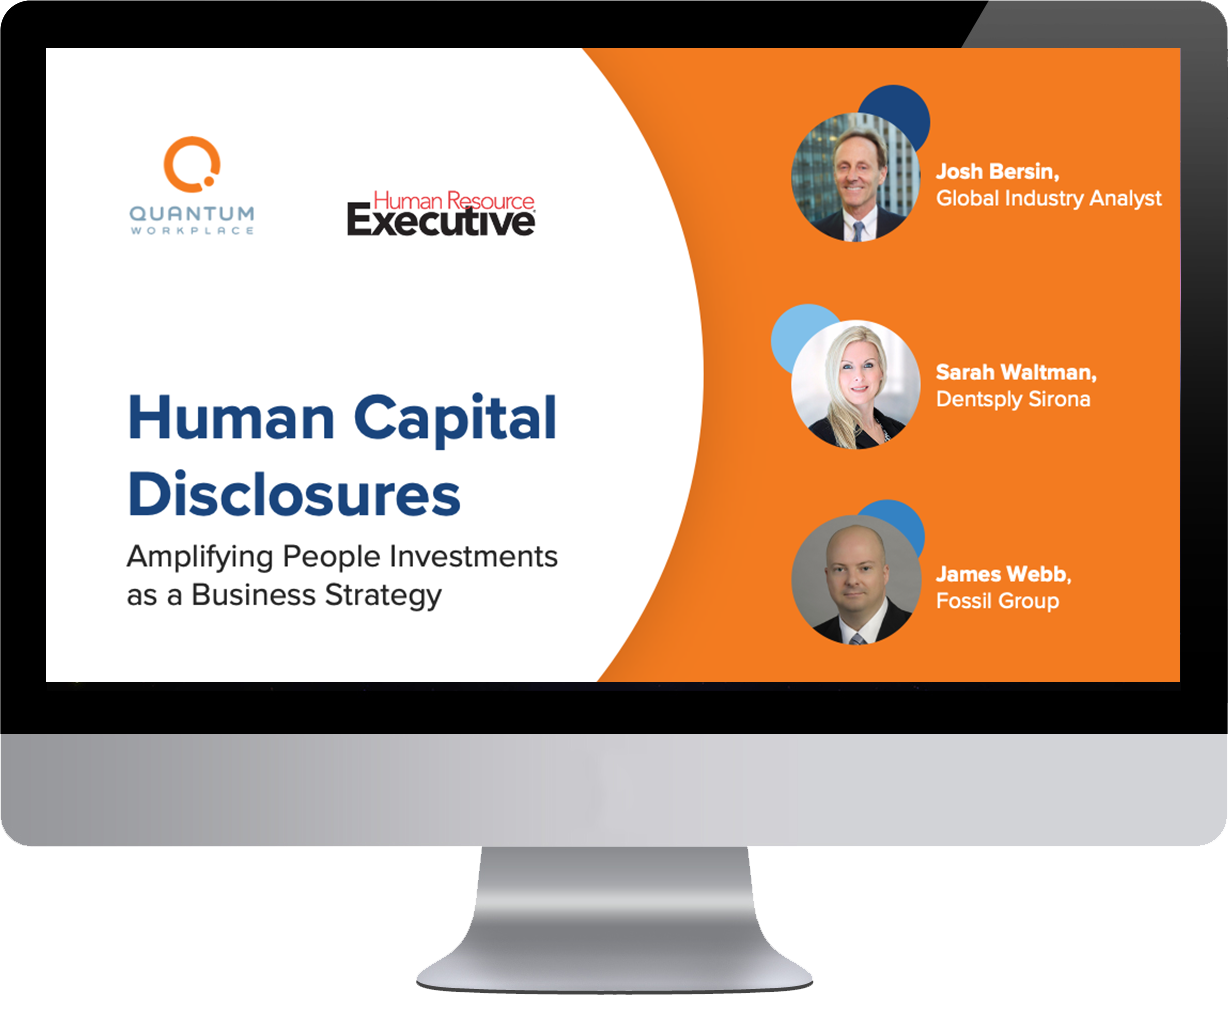 Human Capital Disclosures | Webinar with Josh Bersin